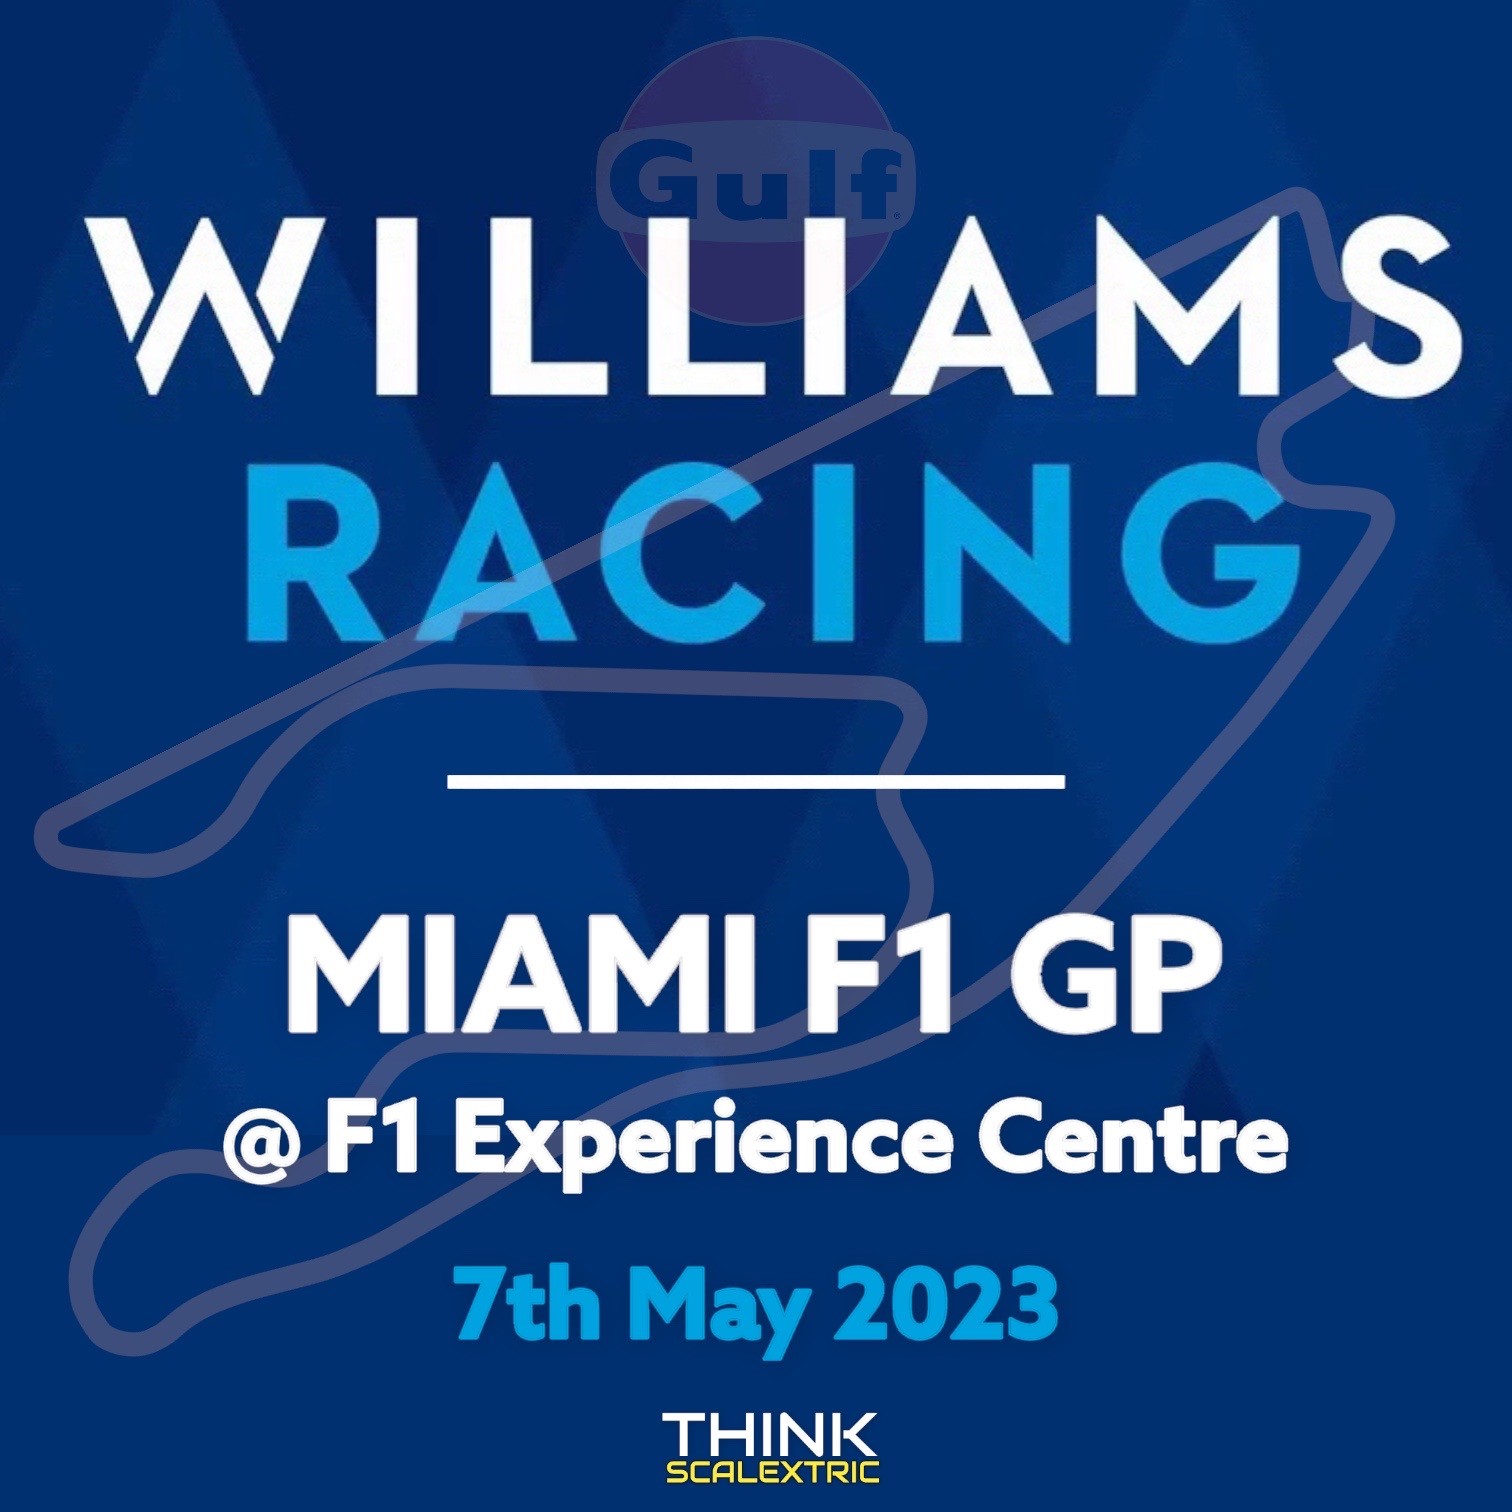 williams f1 racing race day hospitality Miami f1 2023 gp giant scalextric bespoke track build